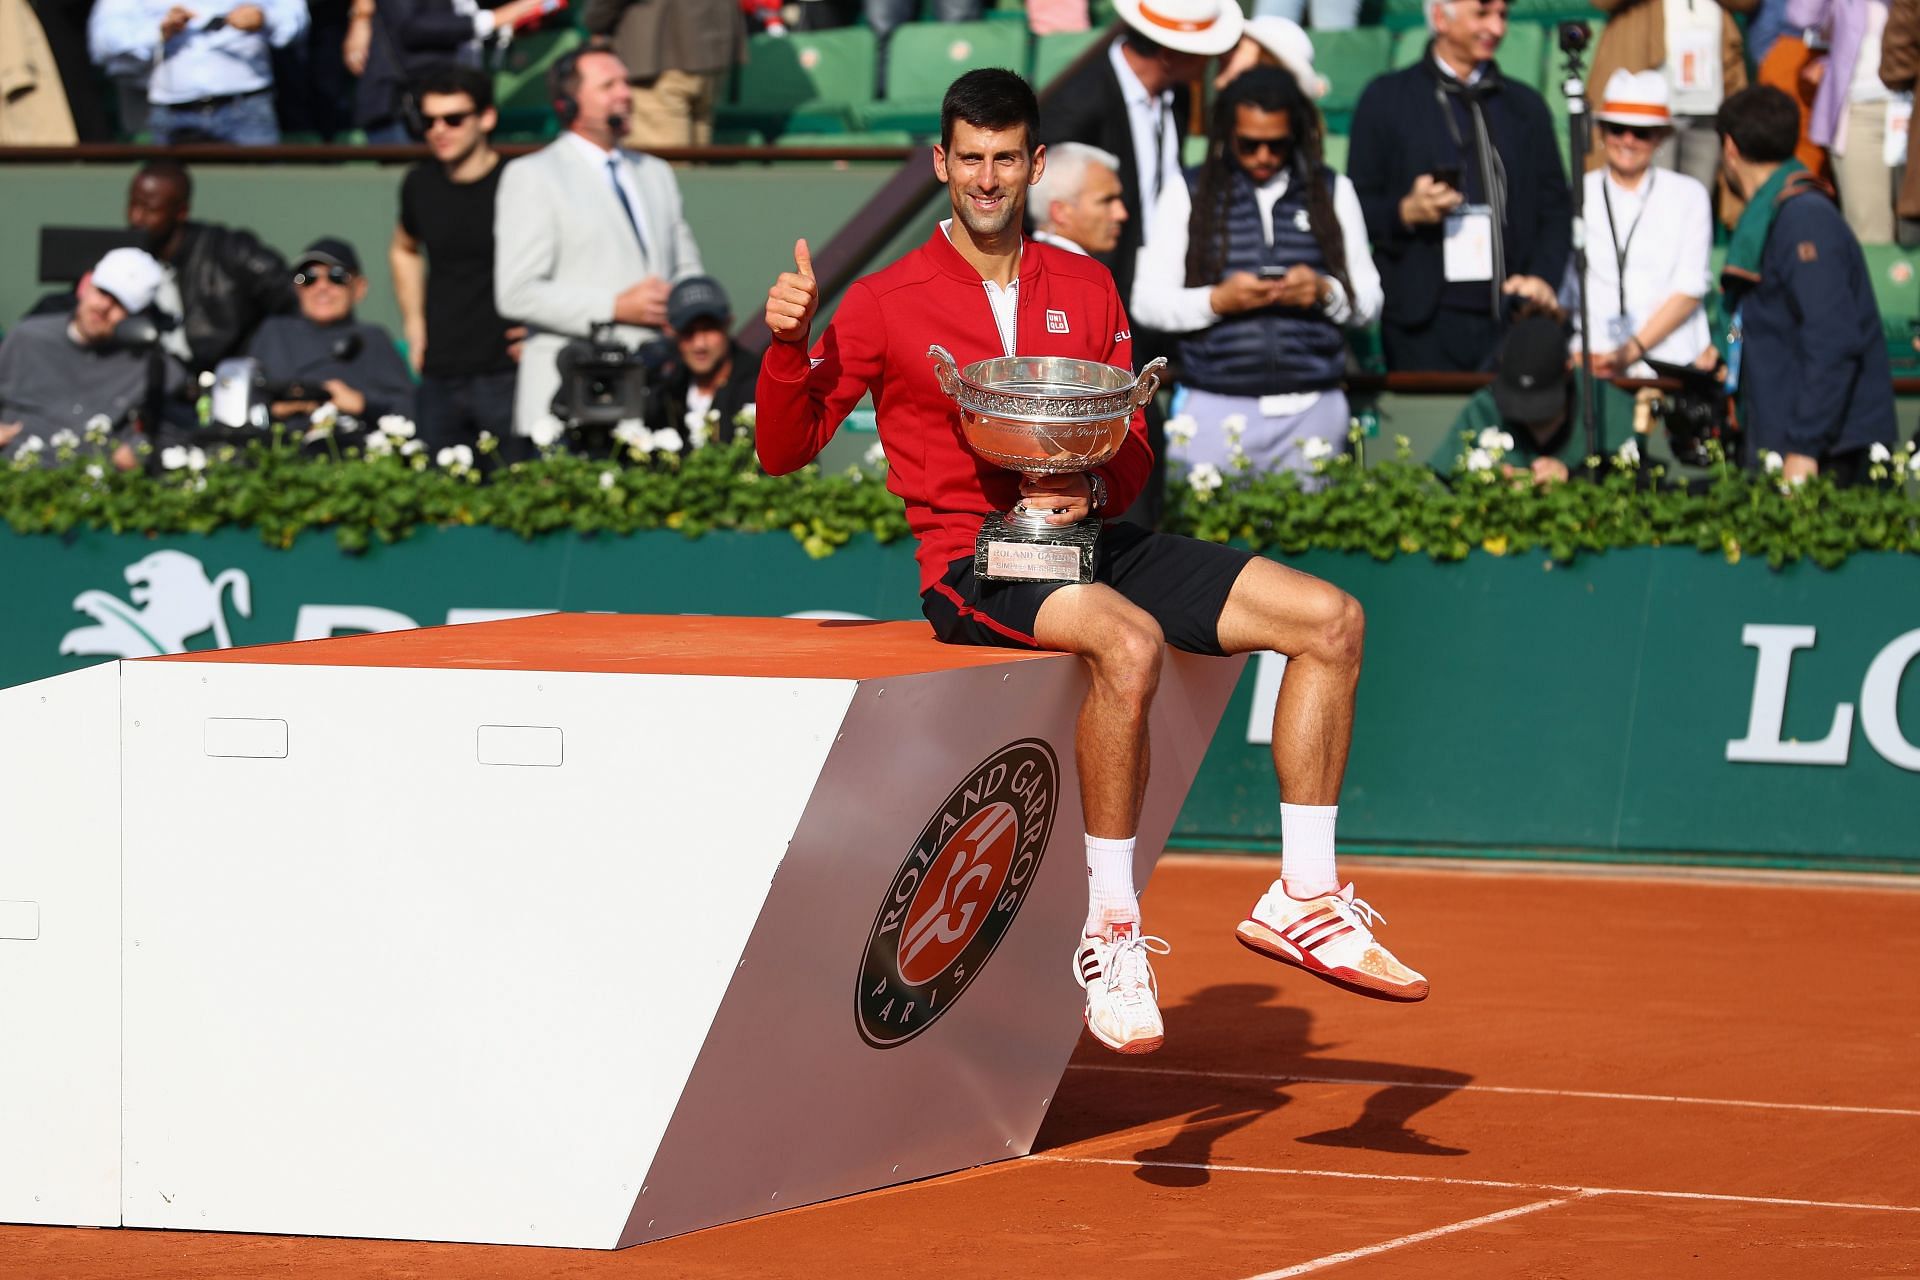 Novak Djokovic at Roland Garros